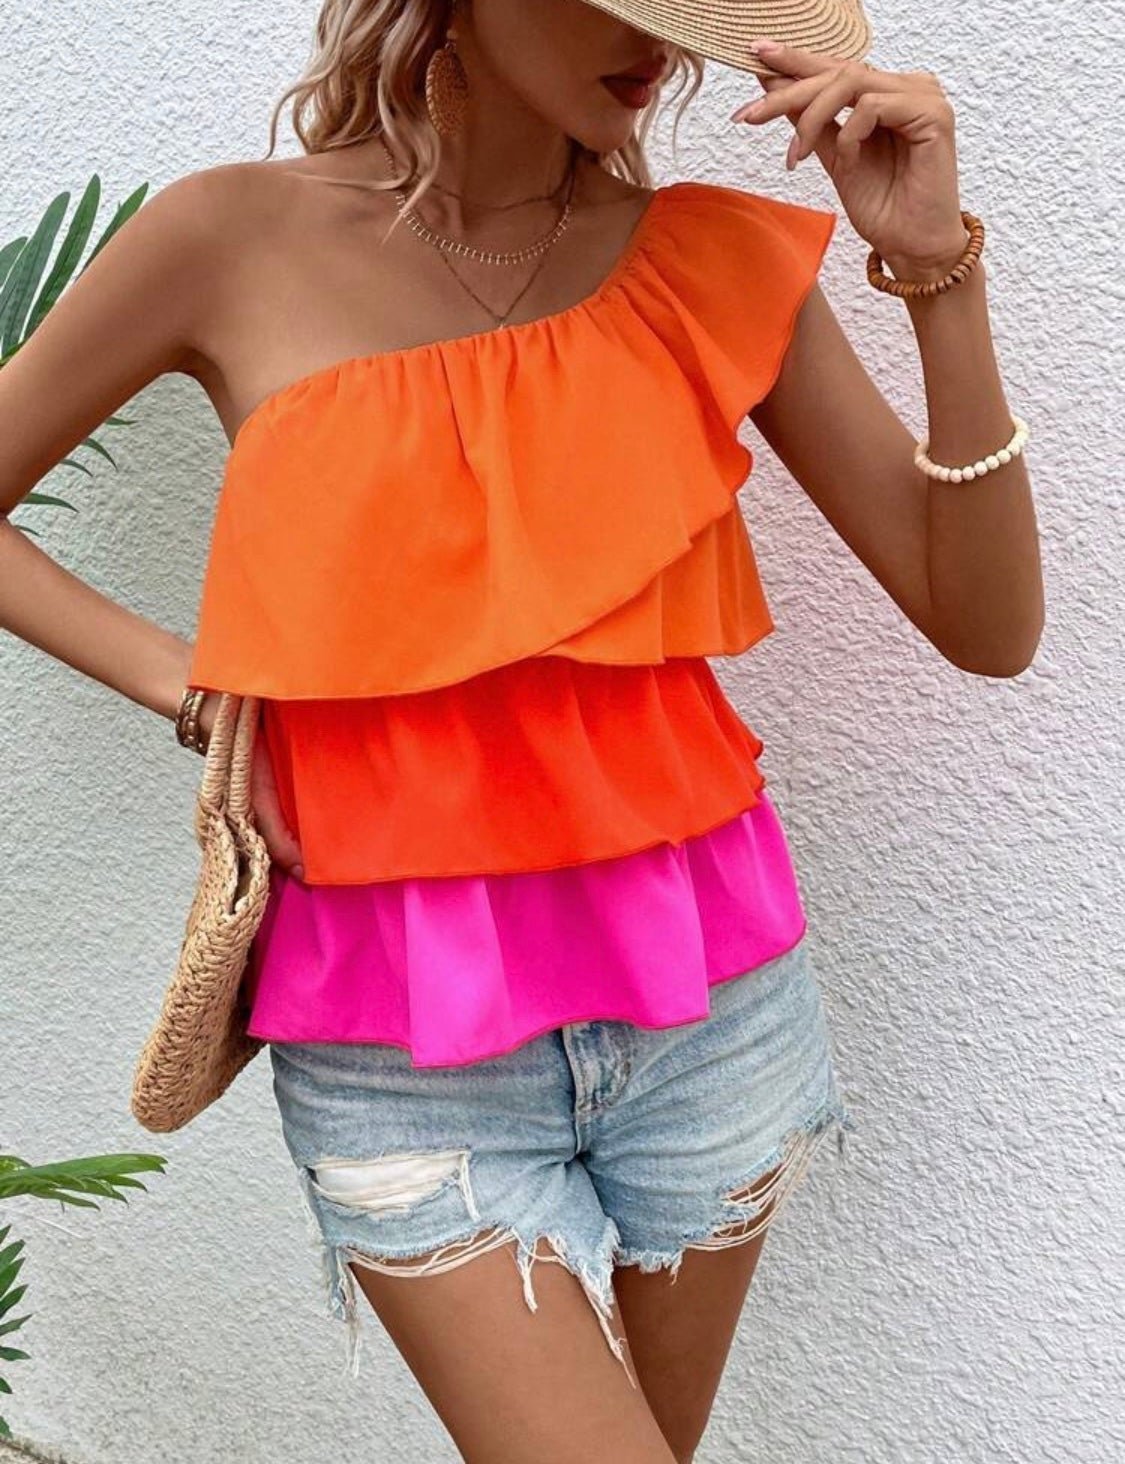 Perfect New - Women’s Pink & Orange One Shoulder Top / Clothing HaJivSW8N best sale